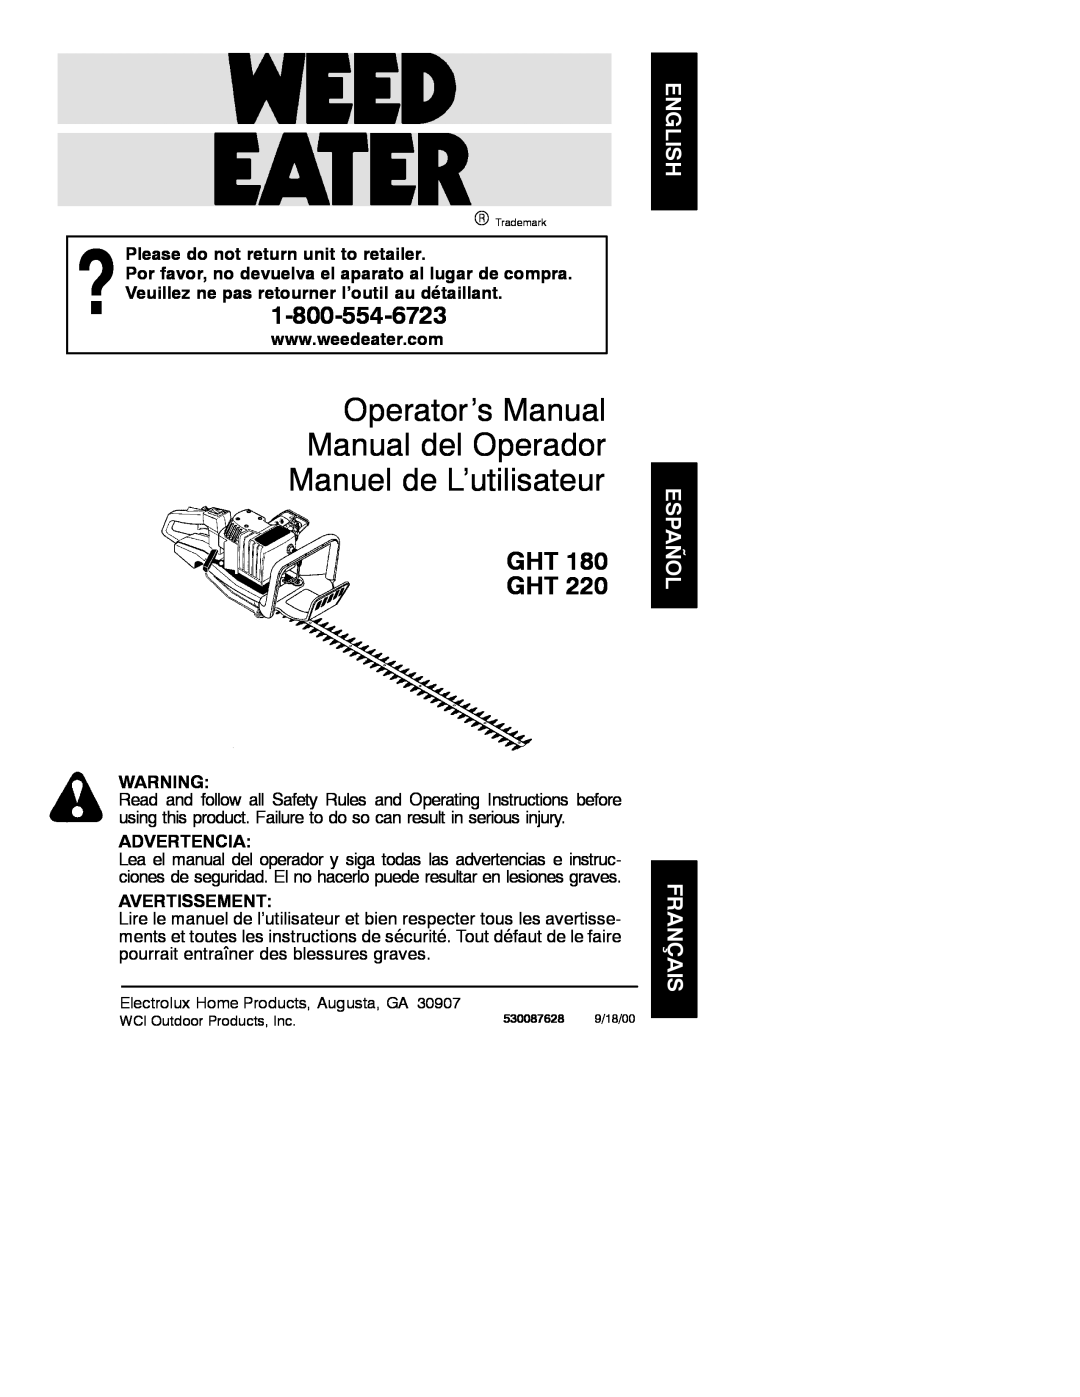 Poulan GHT 180 manual Operator’s Manual Manual del Operador Manuel de L’utilisateur, Ght Ght, Advertencia, Avertissement 